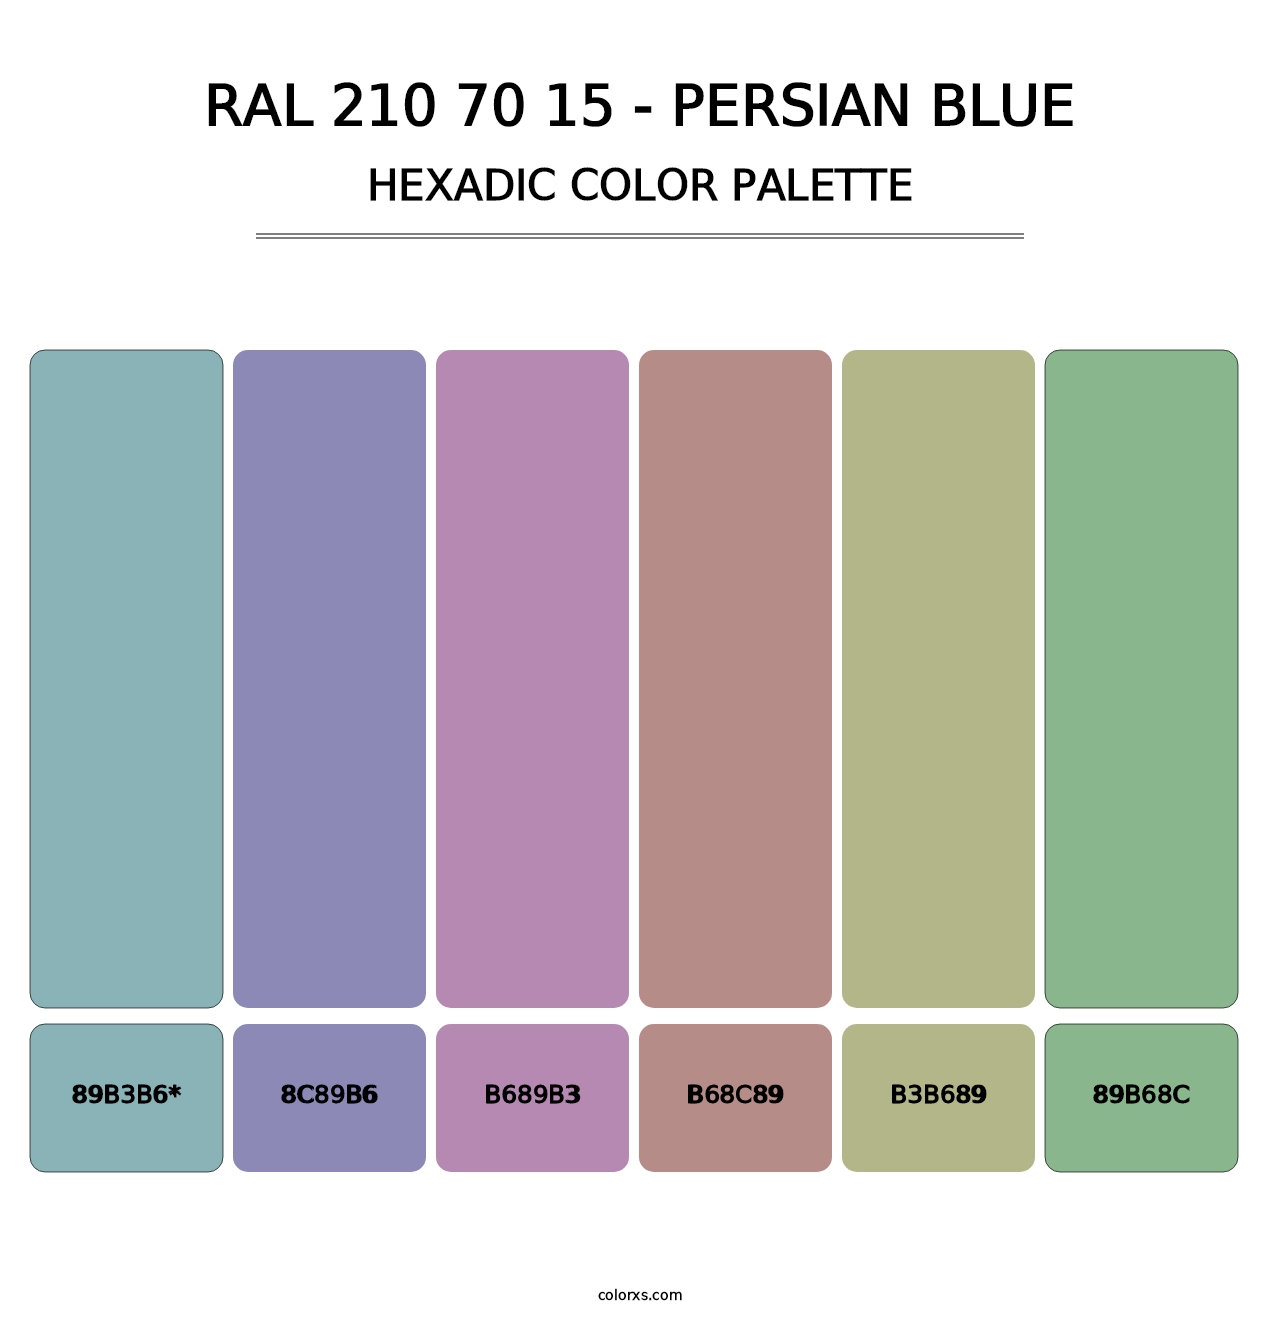 RAL 210 70 15 - Persian Blue - Hexadic Color Palette